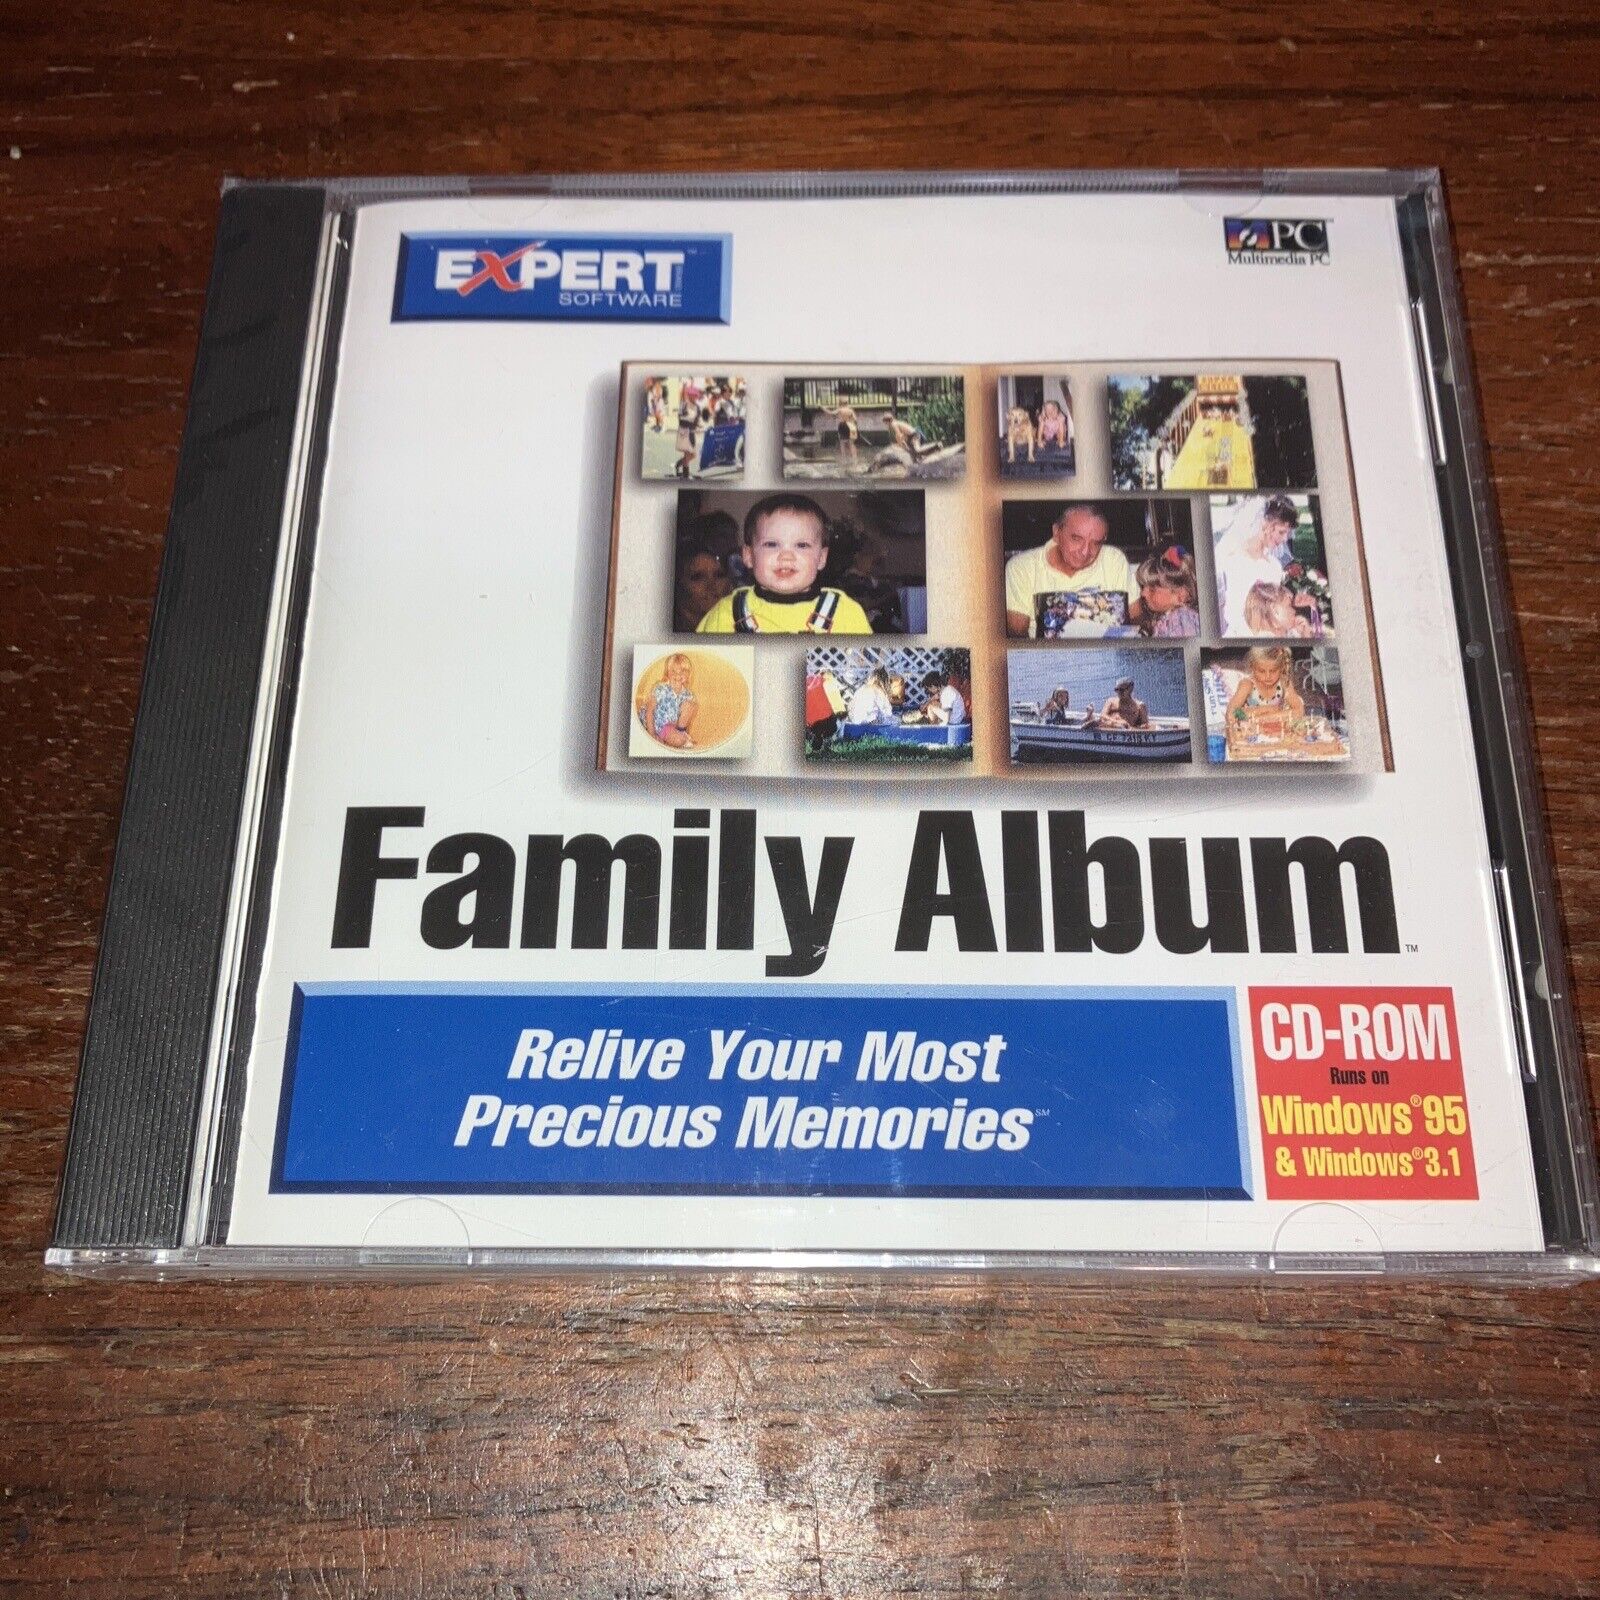 Vintage Software - Windows 95 & Windows 3.1 - 1995 Expert Software Family Album